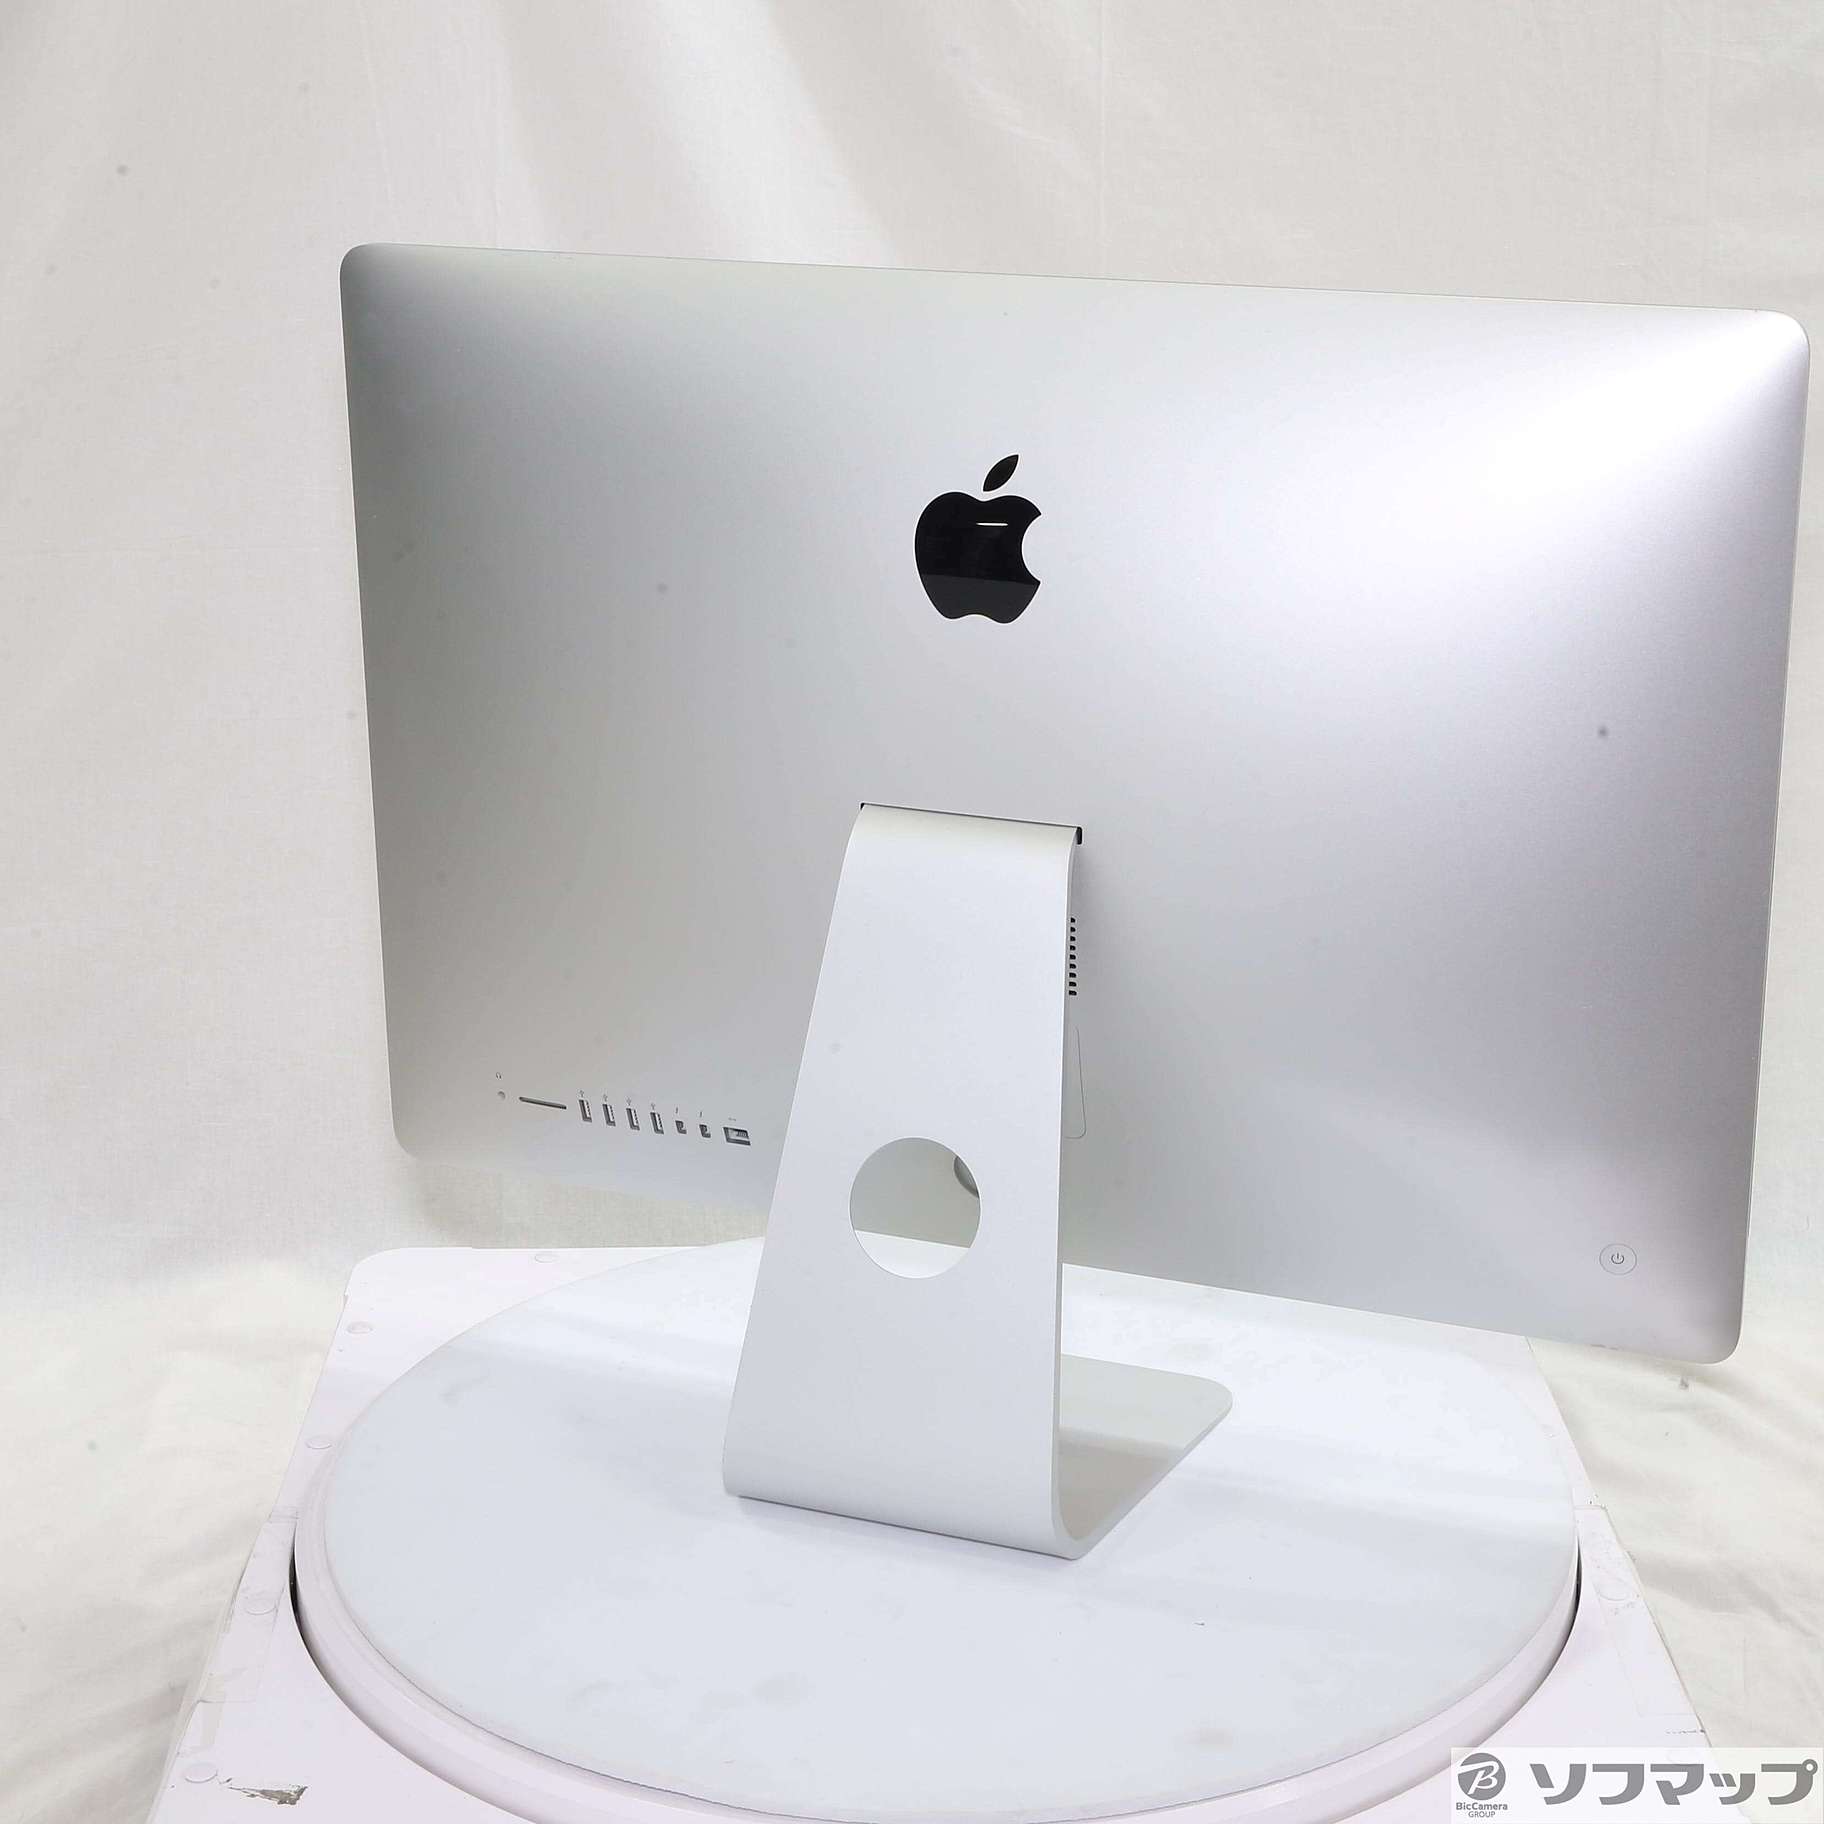 中古】iMac 27-inch Late 2012 MD096J／A Core_i7 3.4GHz 32GB